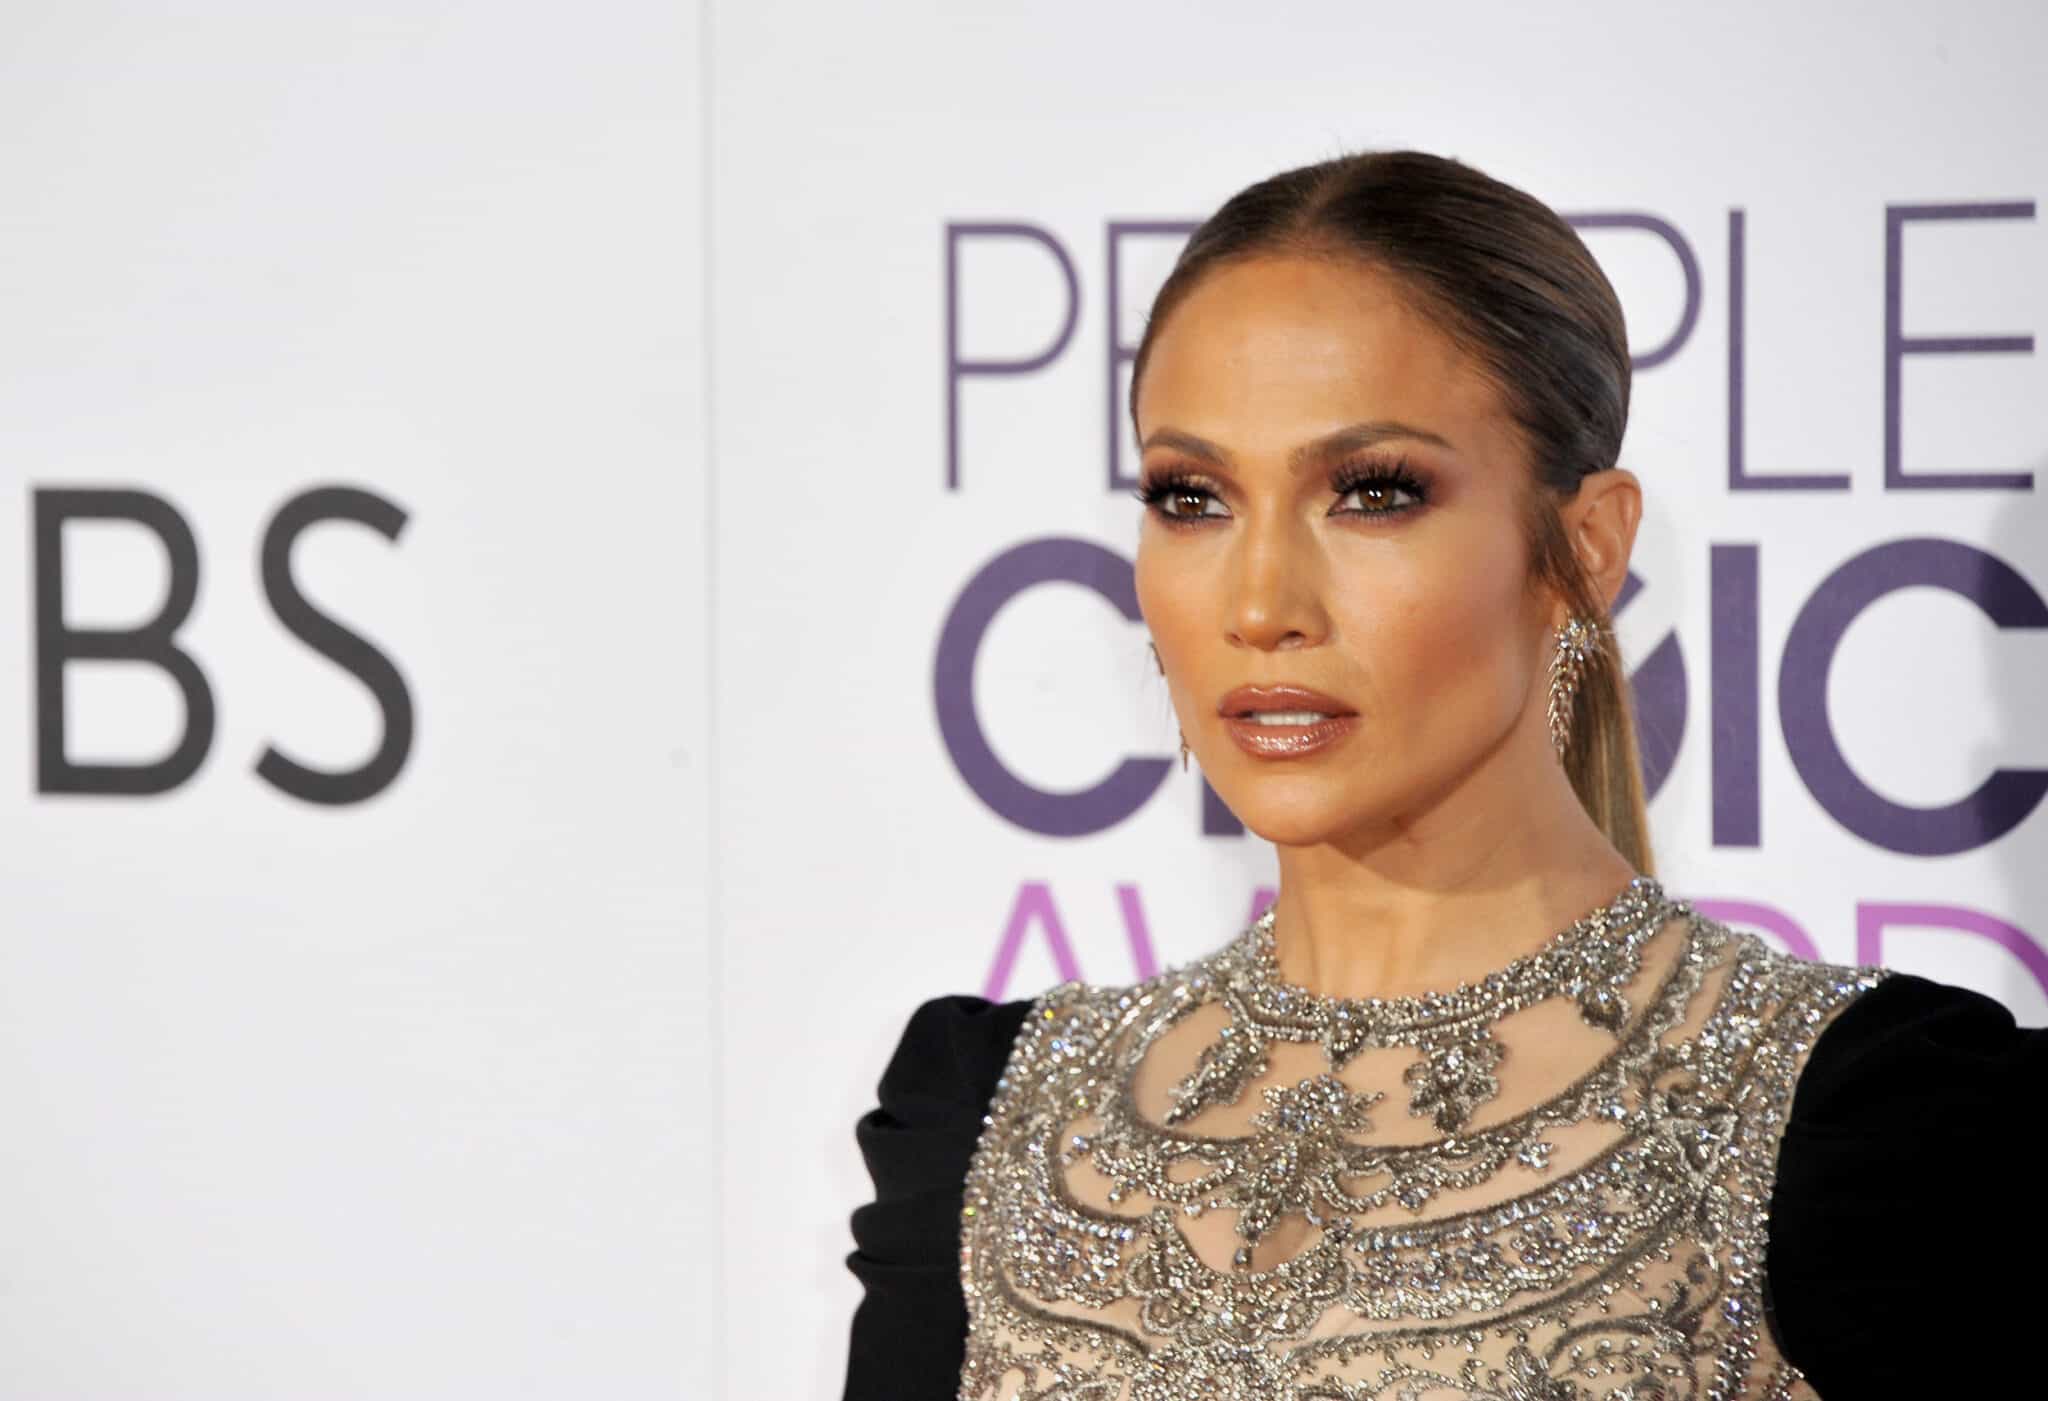 What Makeup Does Jennifer Lopez Wear?